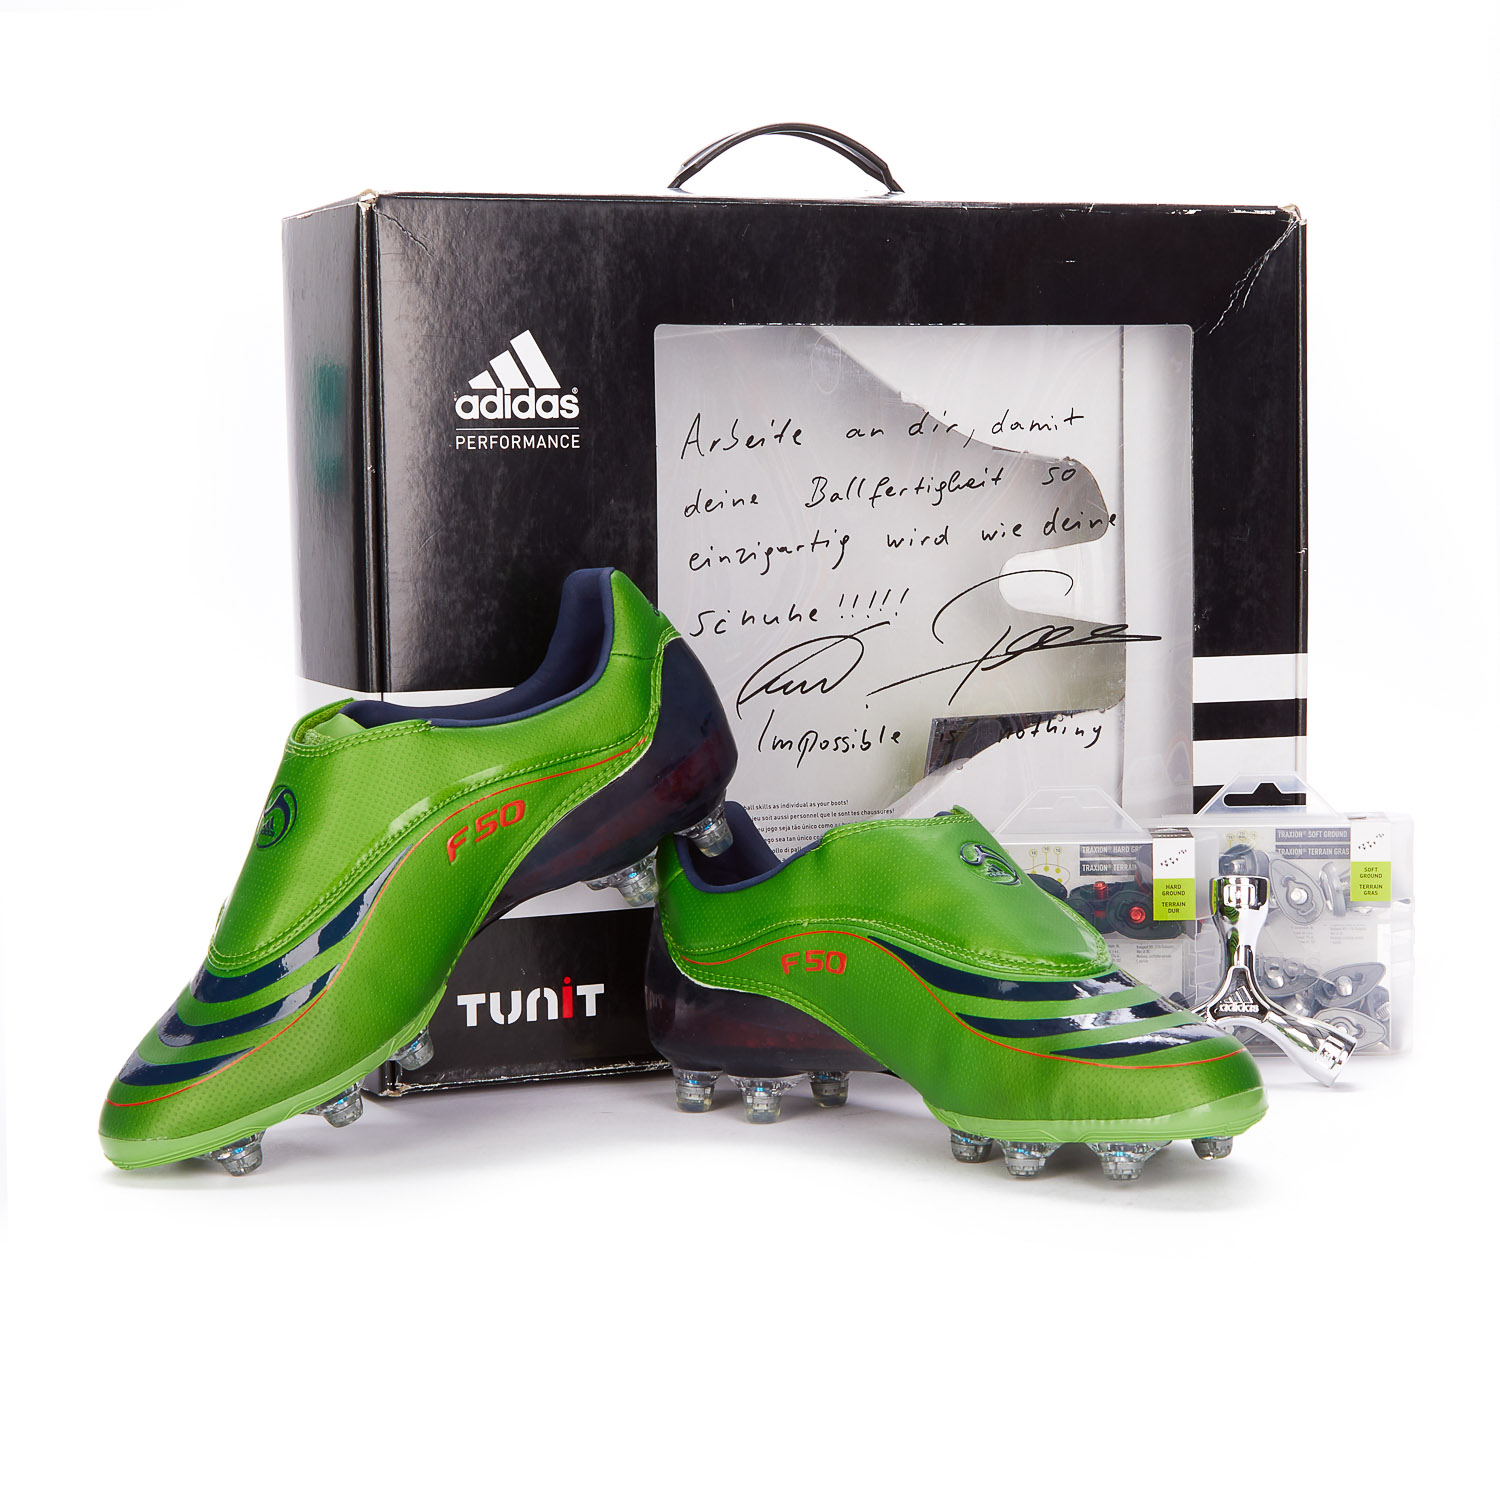 creencia Sábana suicidio 2008 adidas F50.8 TUNiT Football Boots *In Box* FG 6½